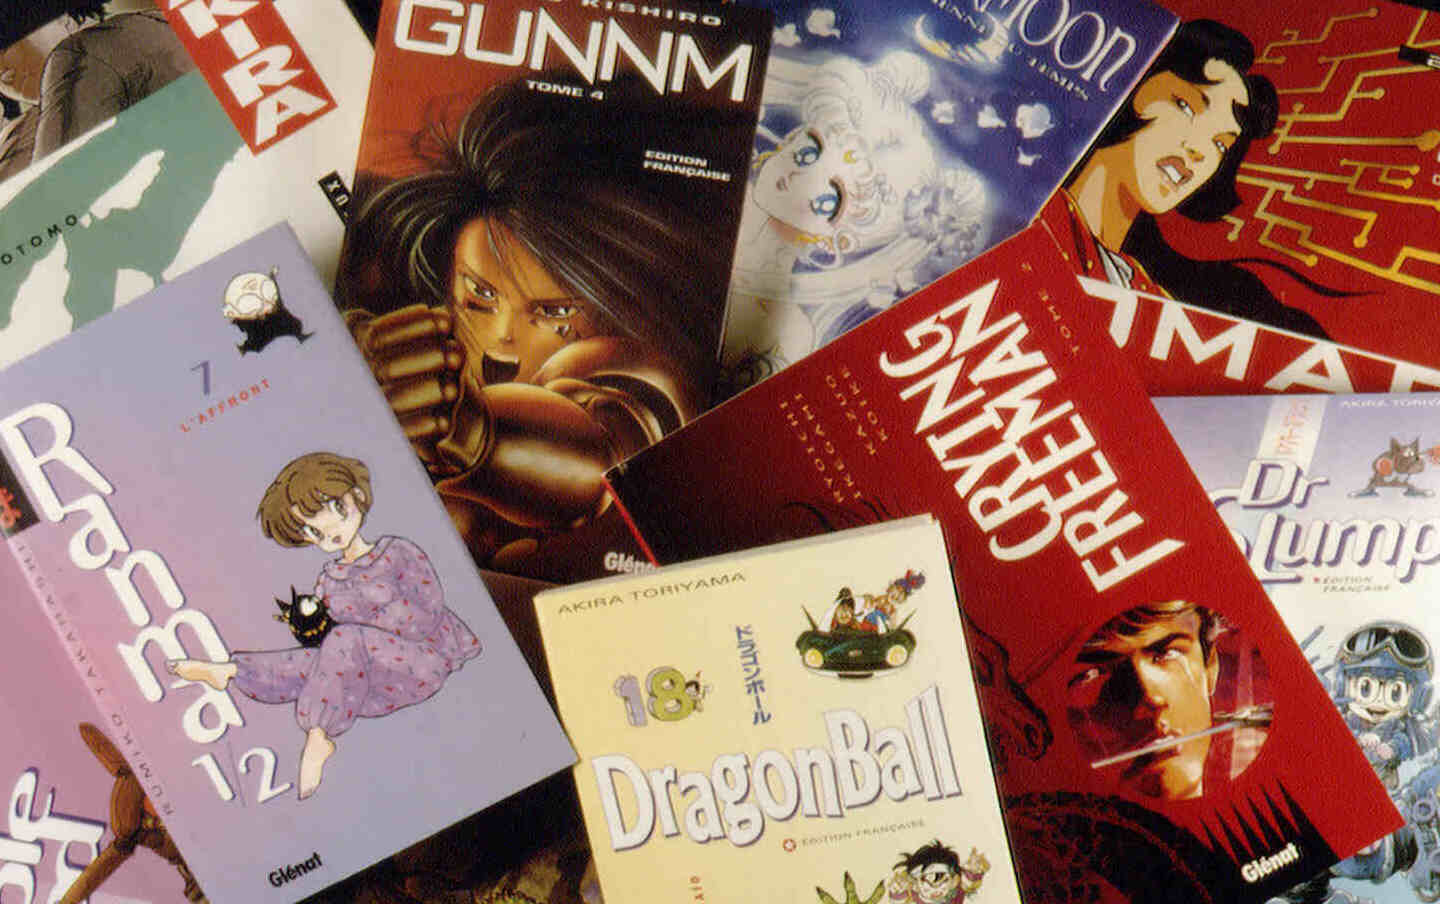 The Manga collection at Editions Glenat